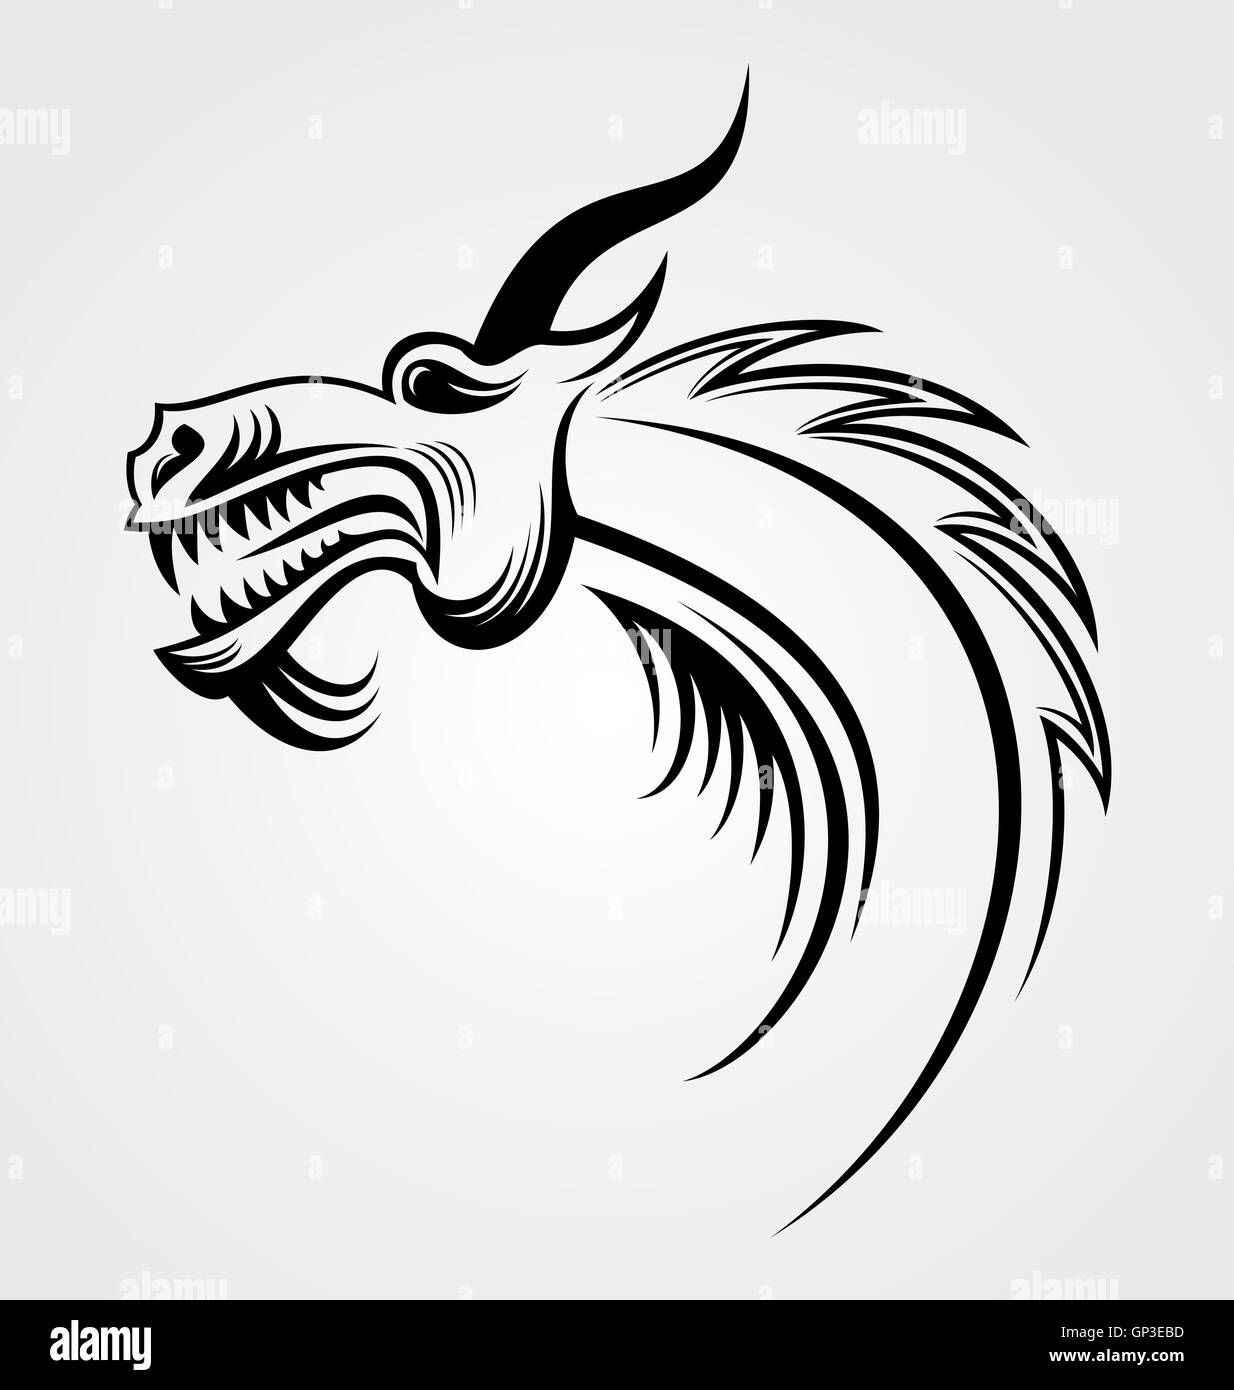 Tête de Dragon Tattoo Design Illustration de Vecteur